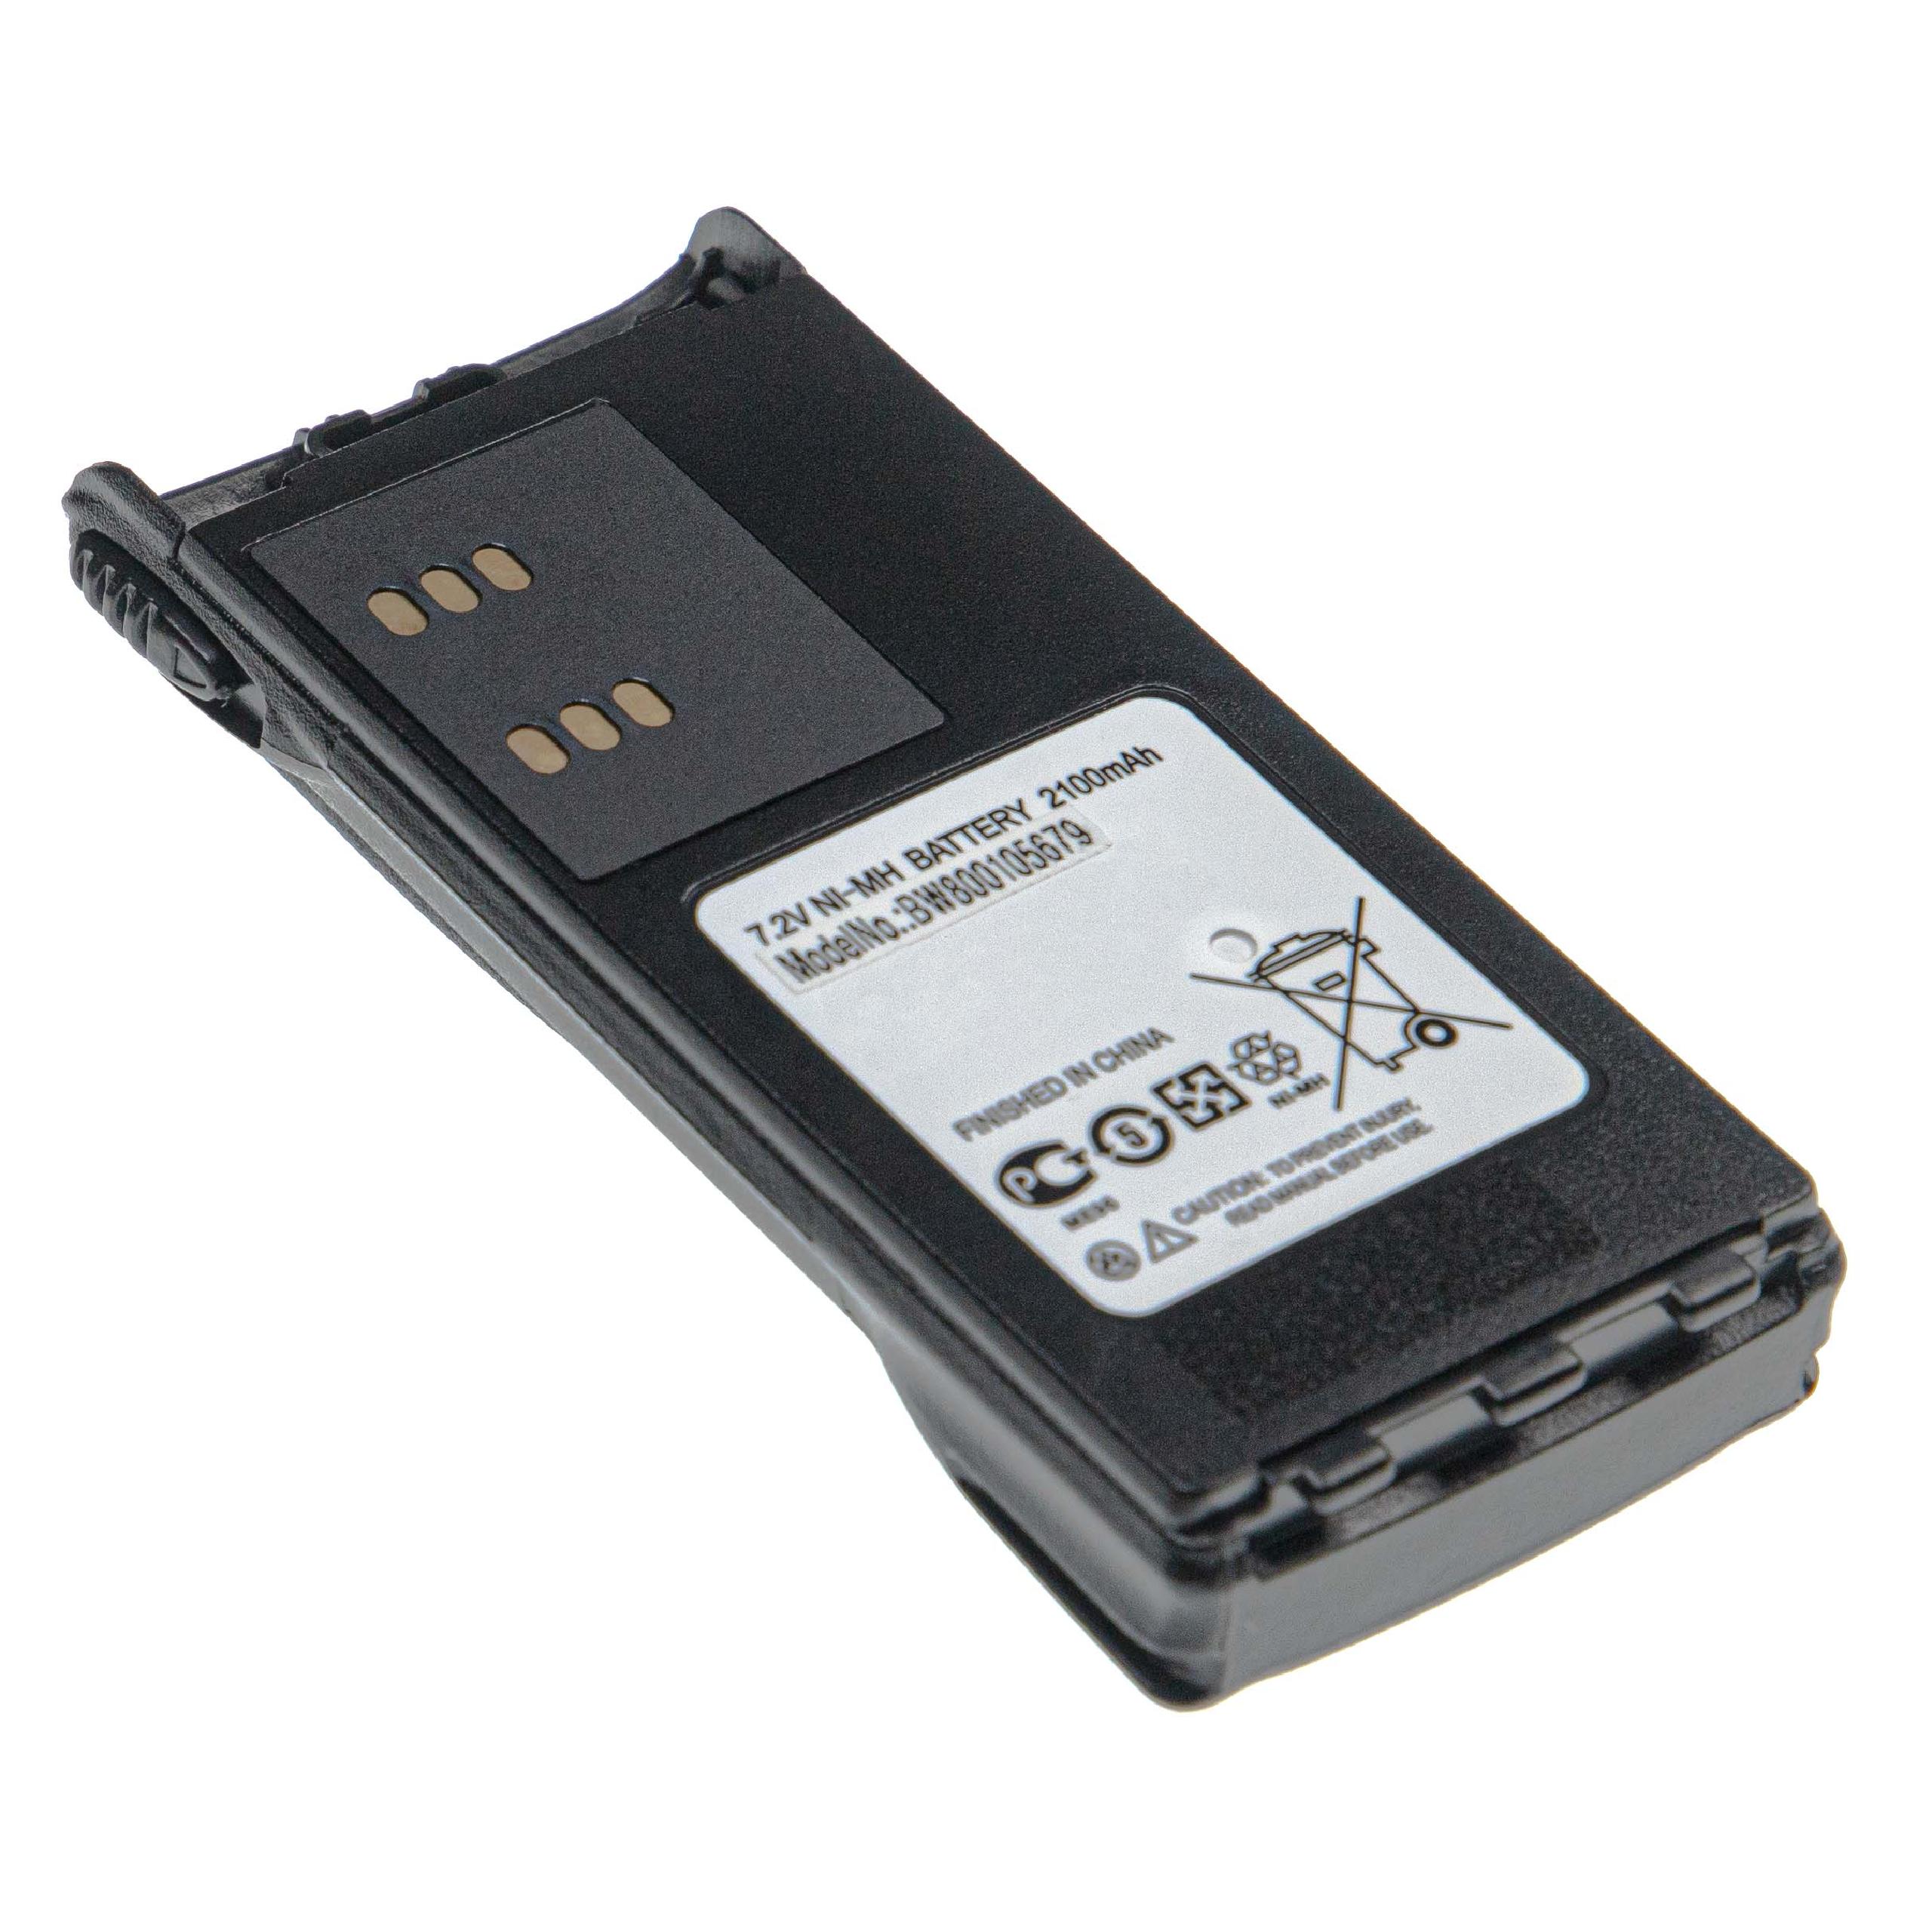 Batterie remplace Motorola HMNN4151, HMNN4154, HMNN4158, HMNN4159 pour radio talkie-walkie - 2100mAh 7,2V NiMH